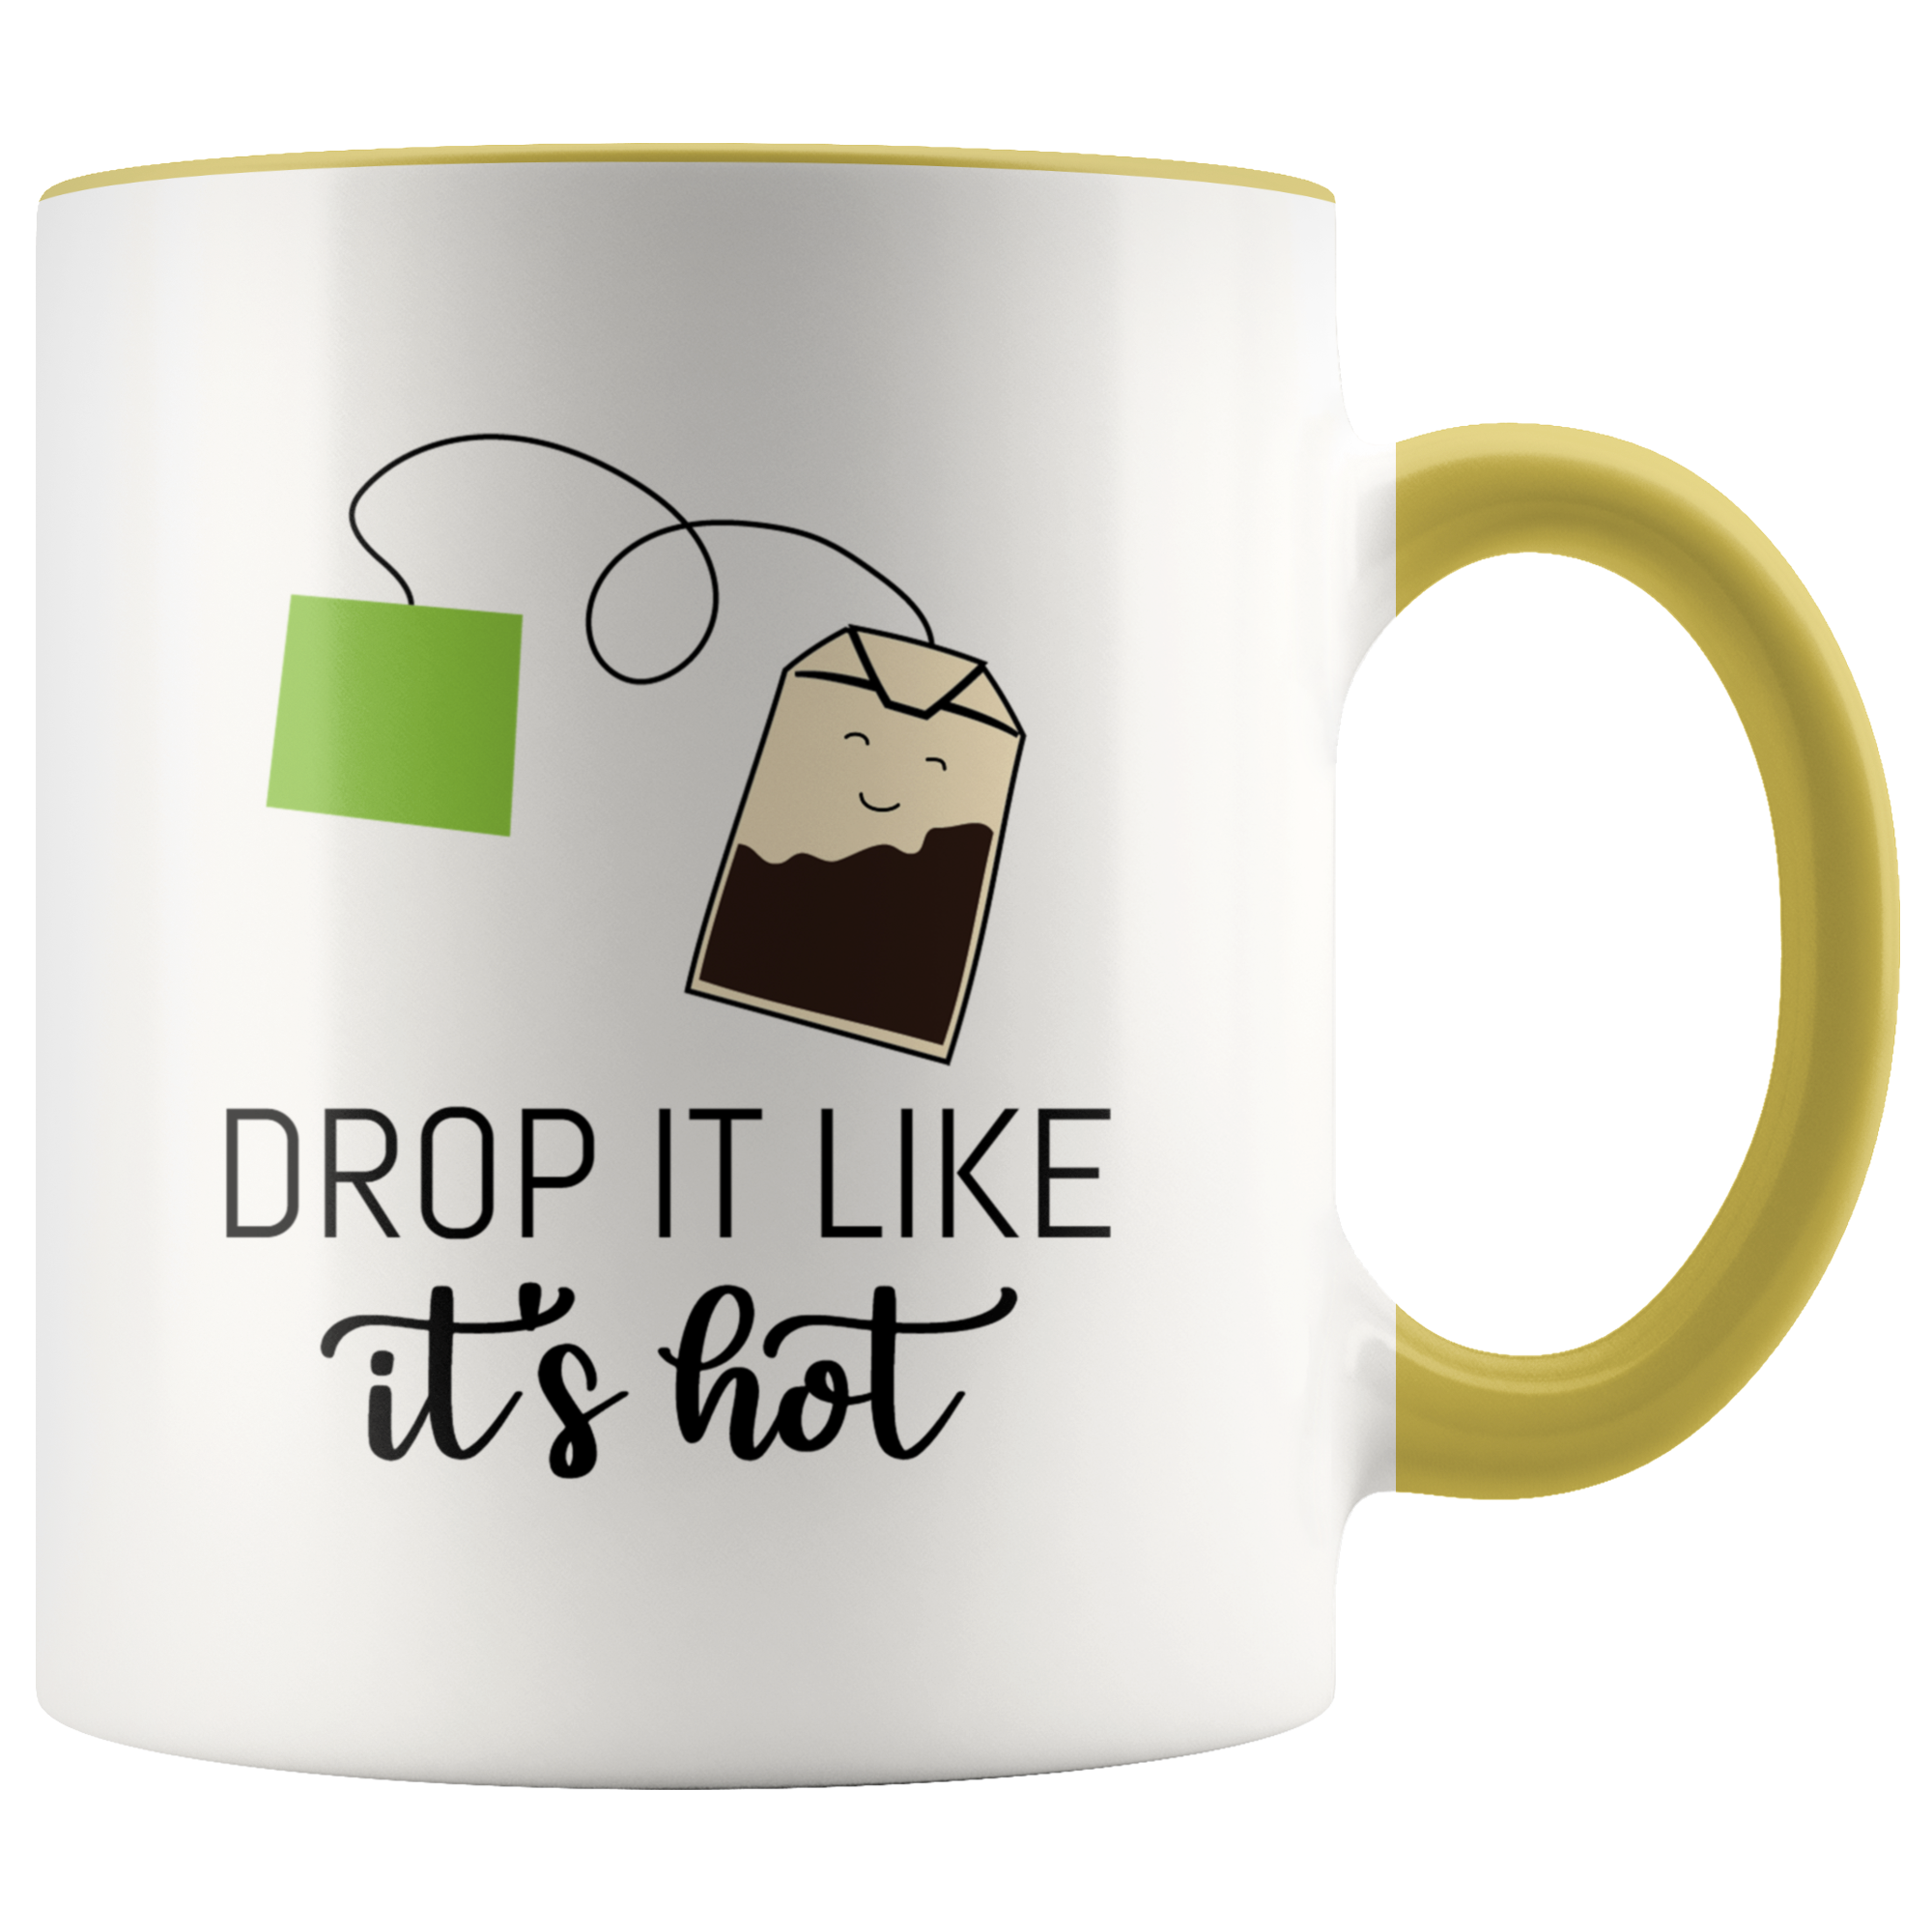 Drop it Like It's Hot Mug